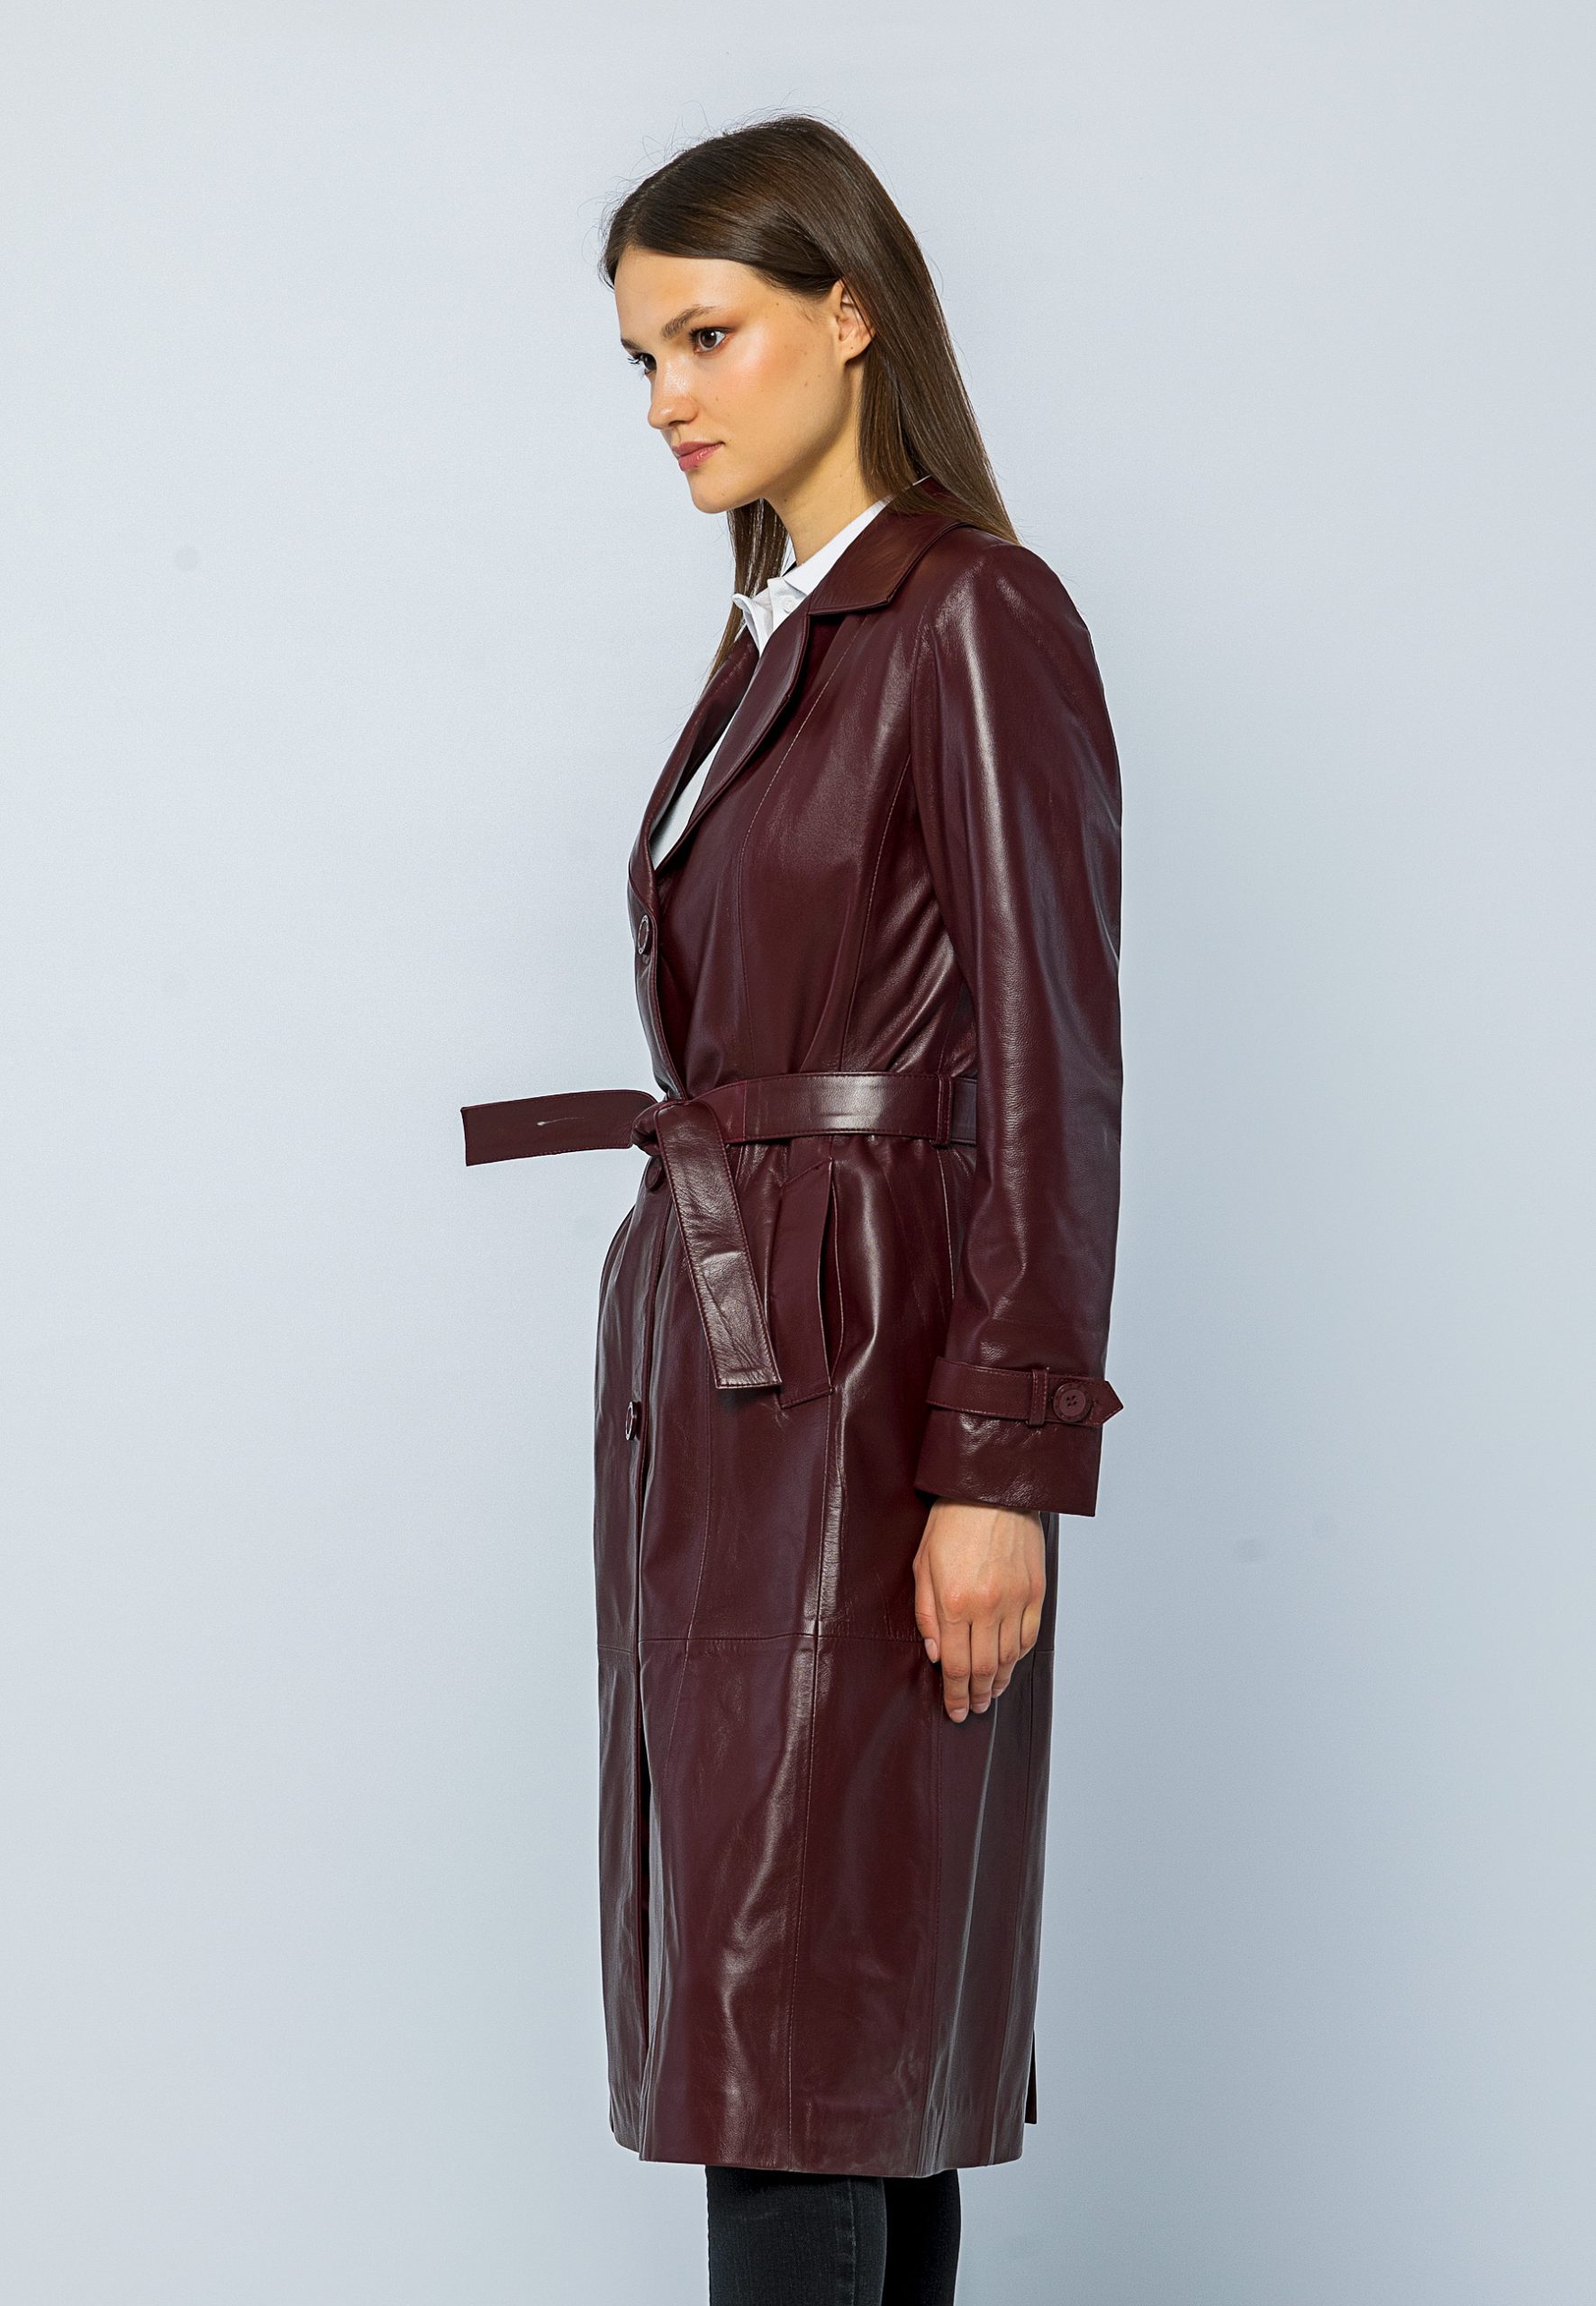 Basics&More Women's Damson Long Trench Leather Jacket - Basics&More